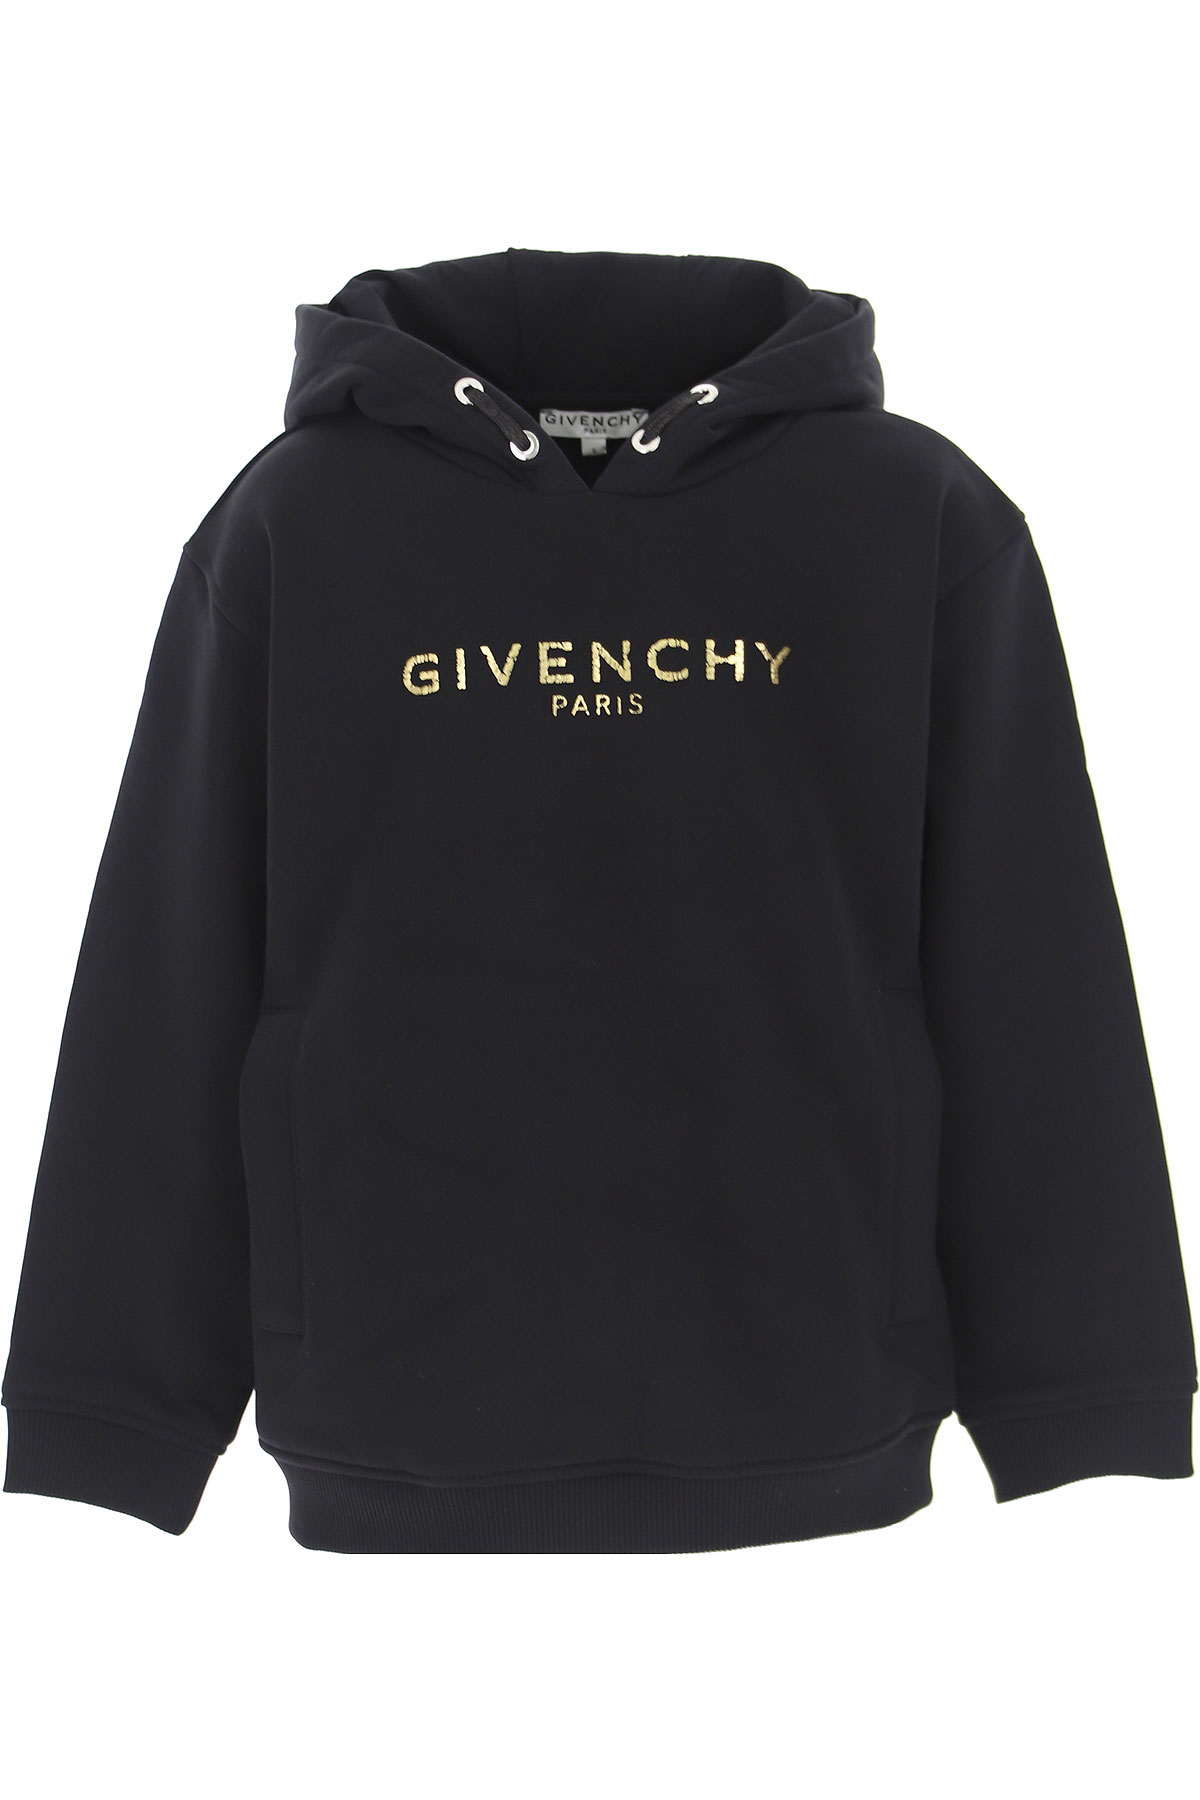 Girls Clothing Givenchy, Style code: h15171-09b-